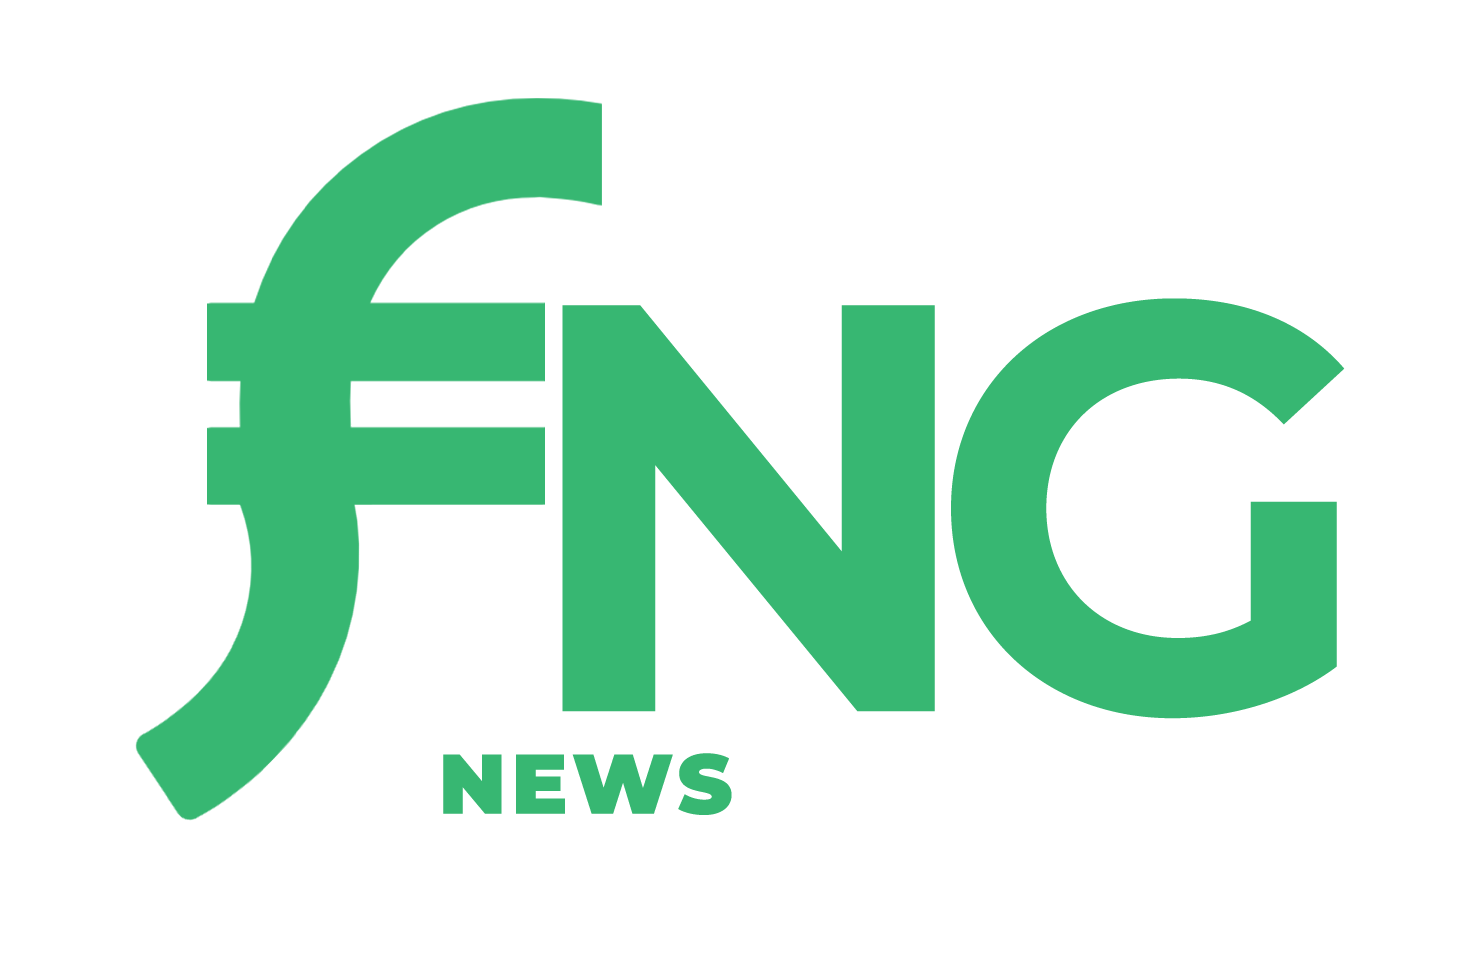 forex news group logo